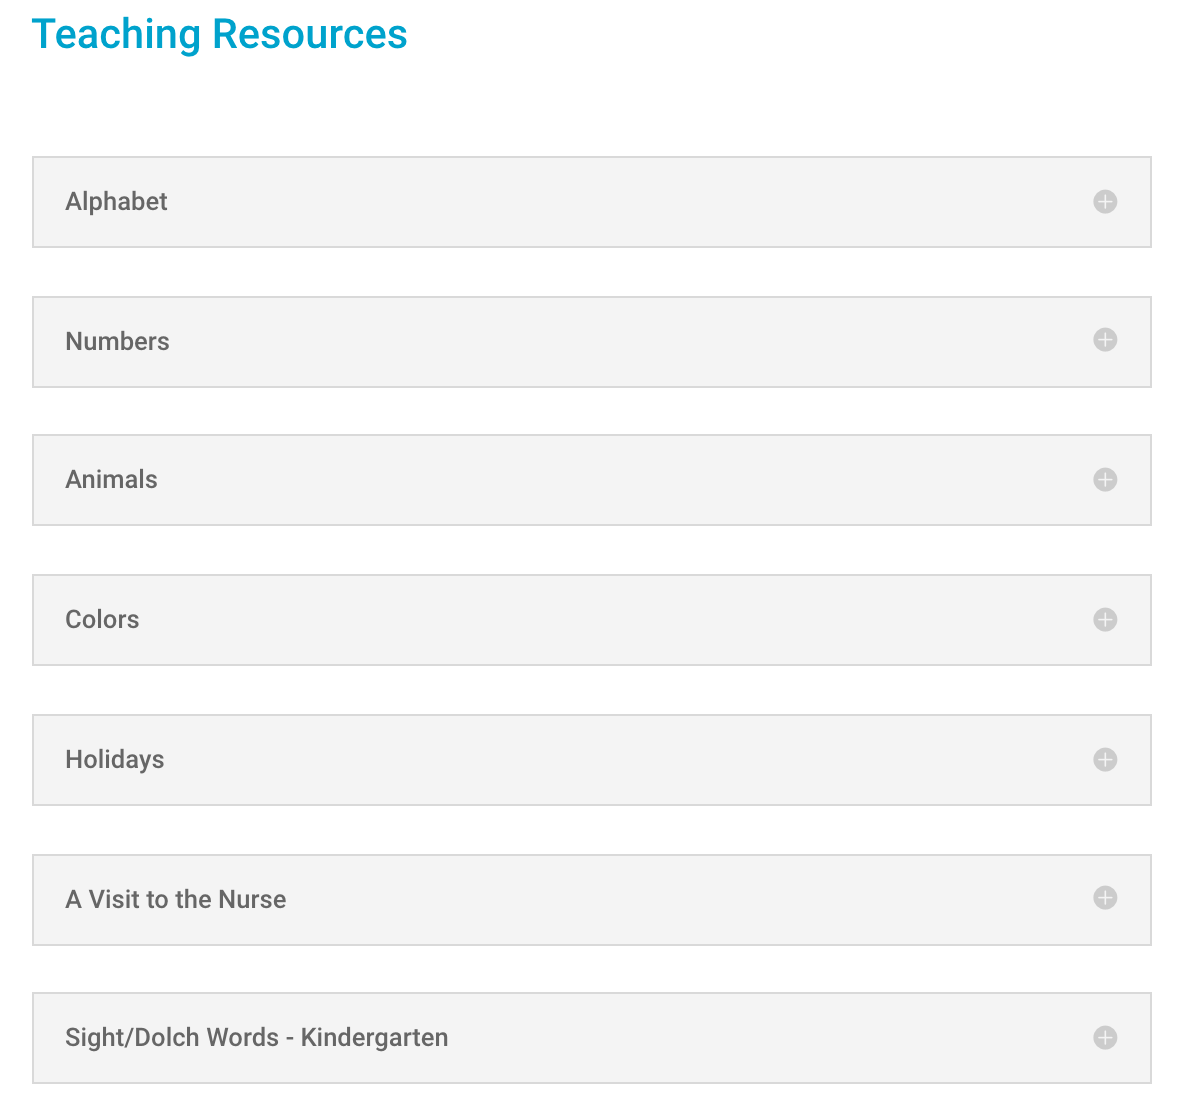 signbabysign.org:teacher-resources: